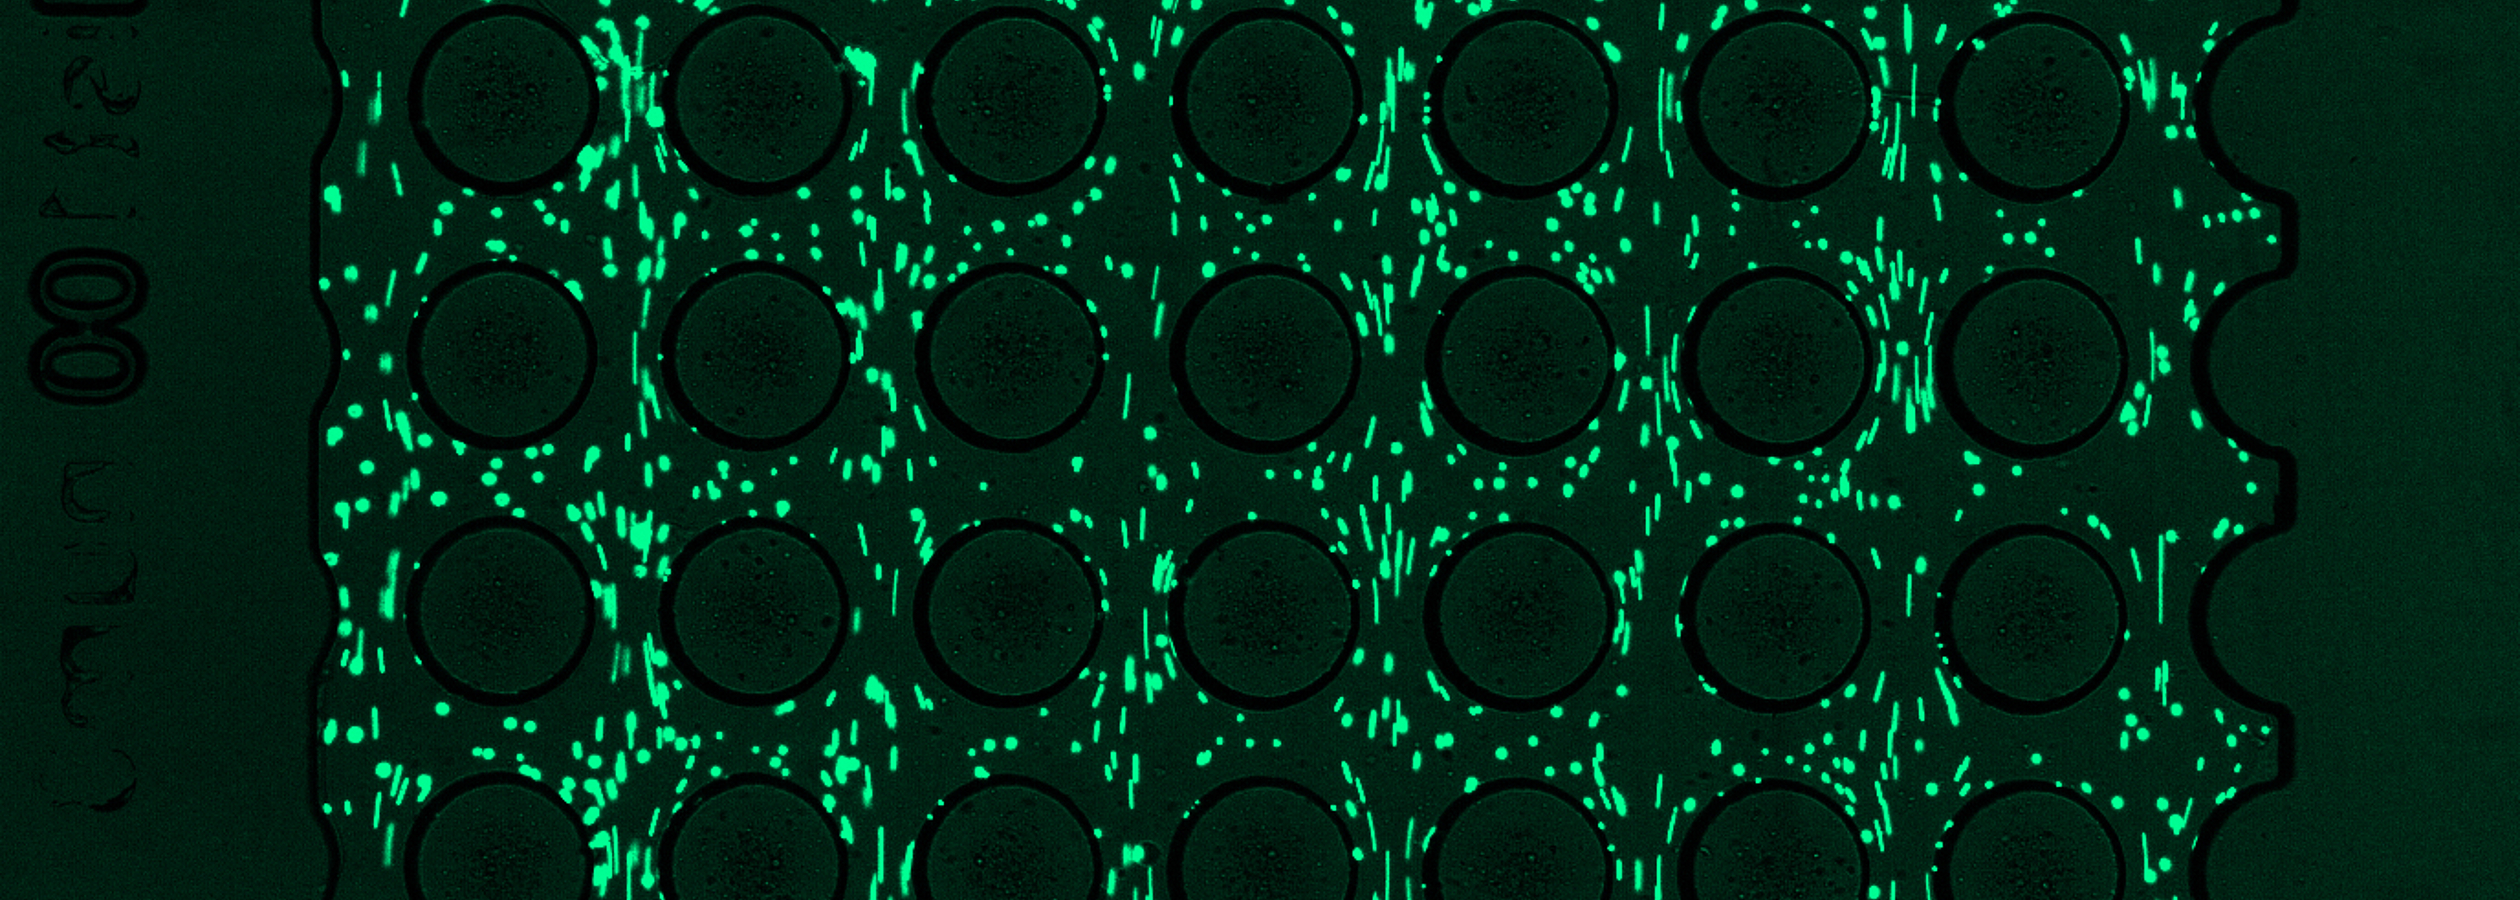 Fluoreszierende Polystyrolpartikel im Mikrokanal.